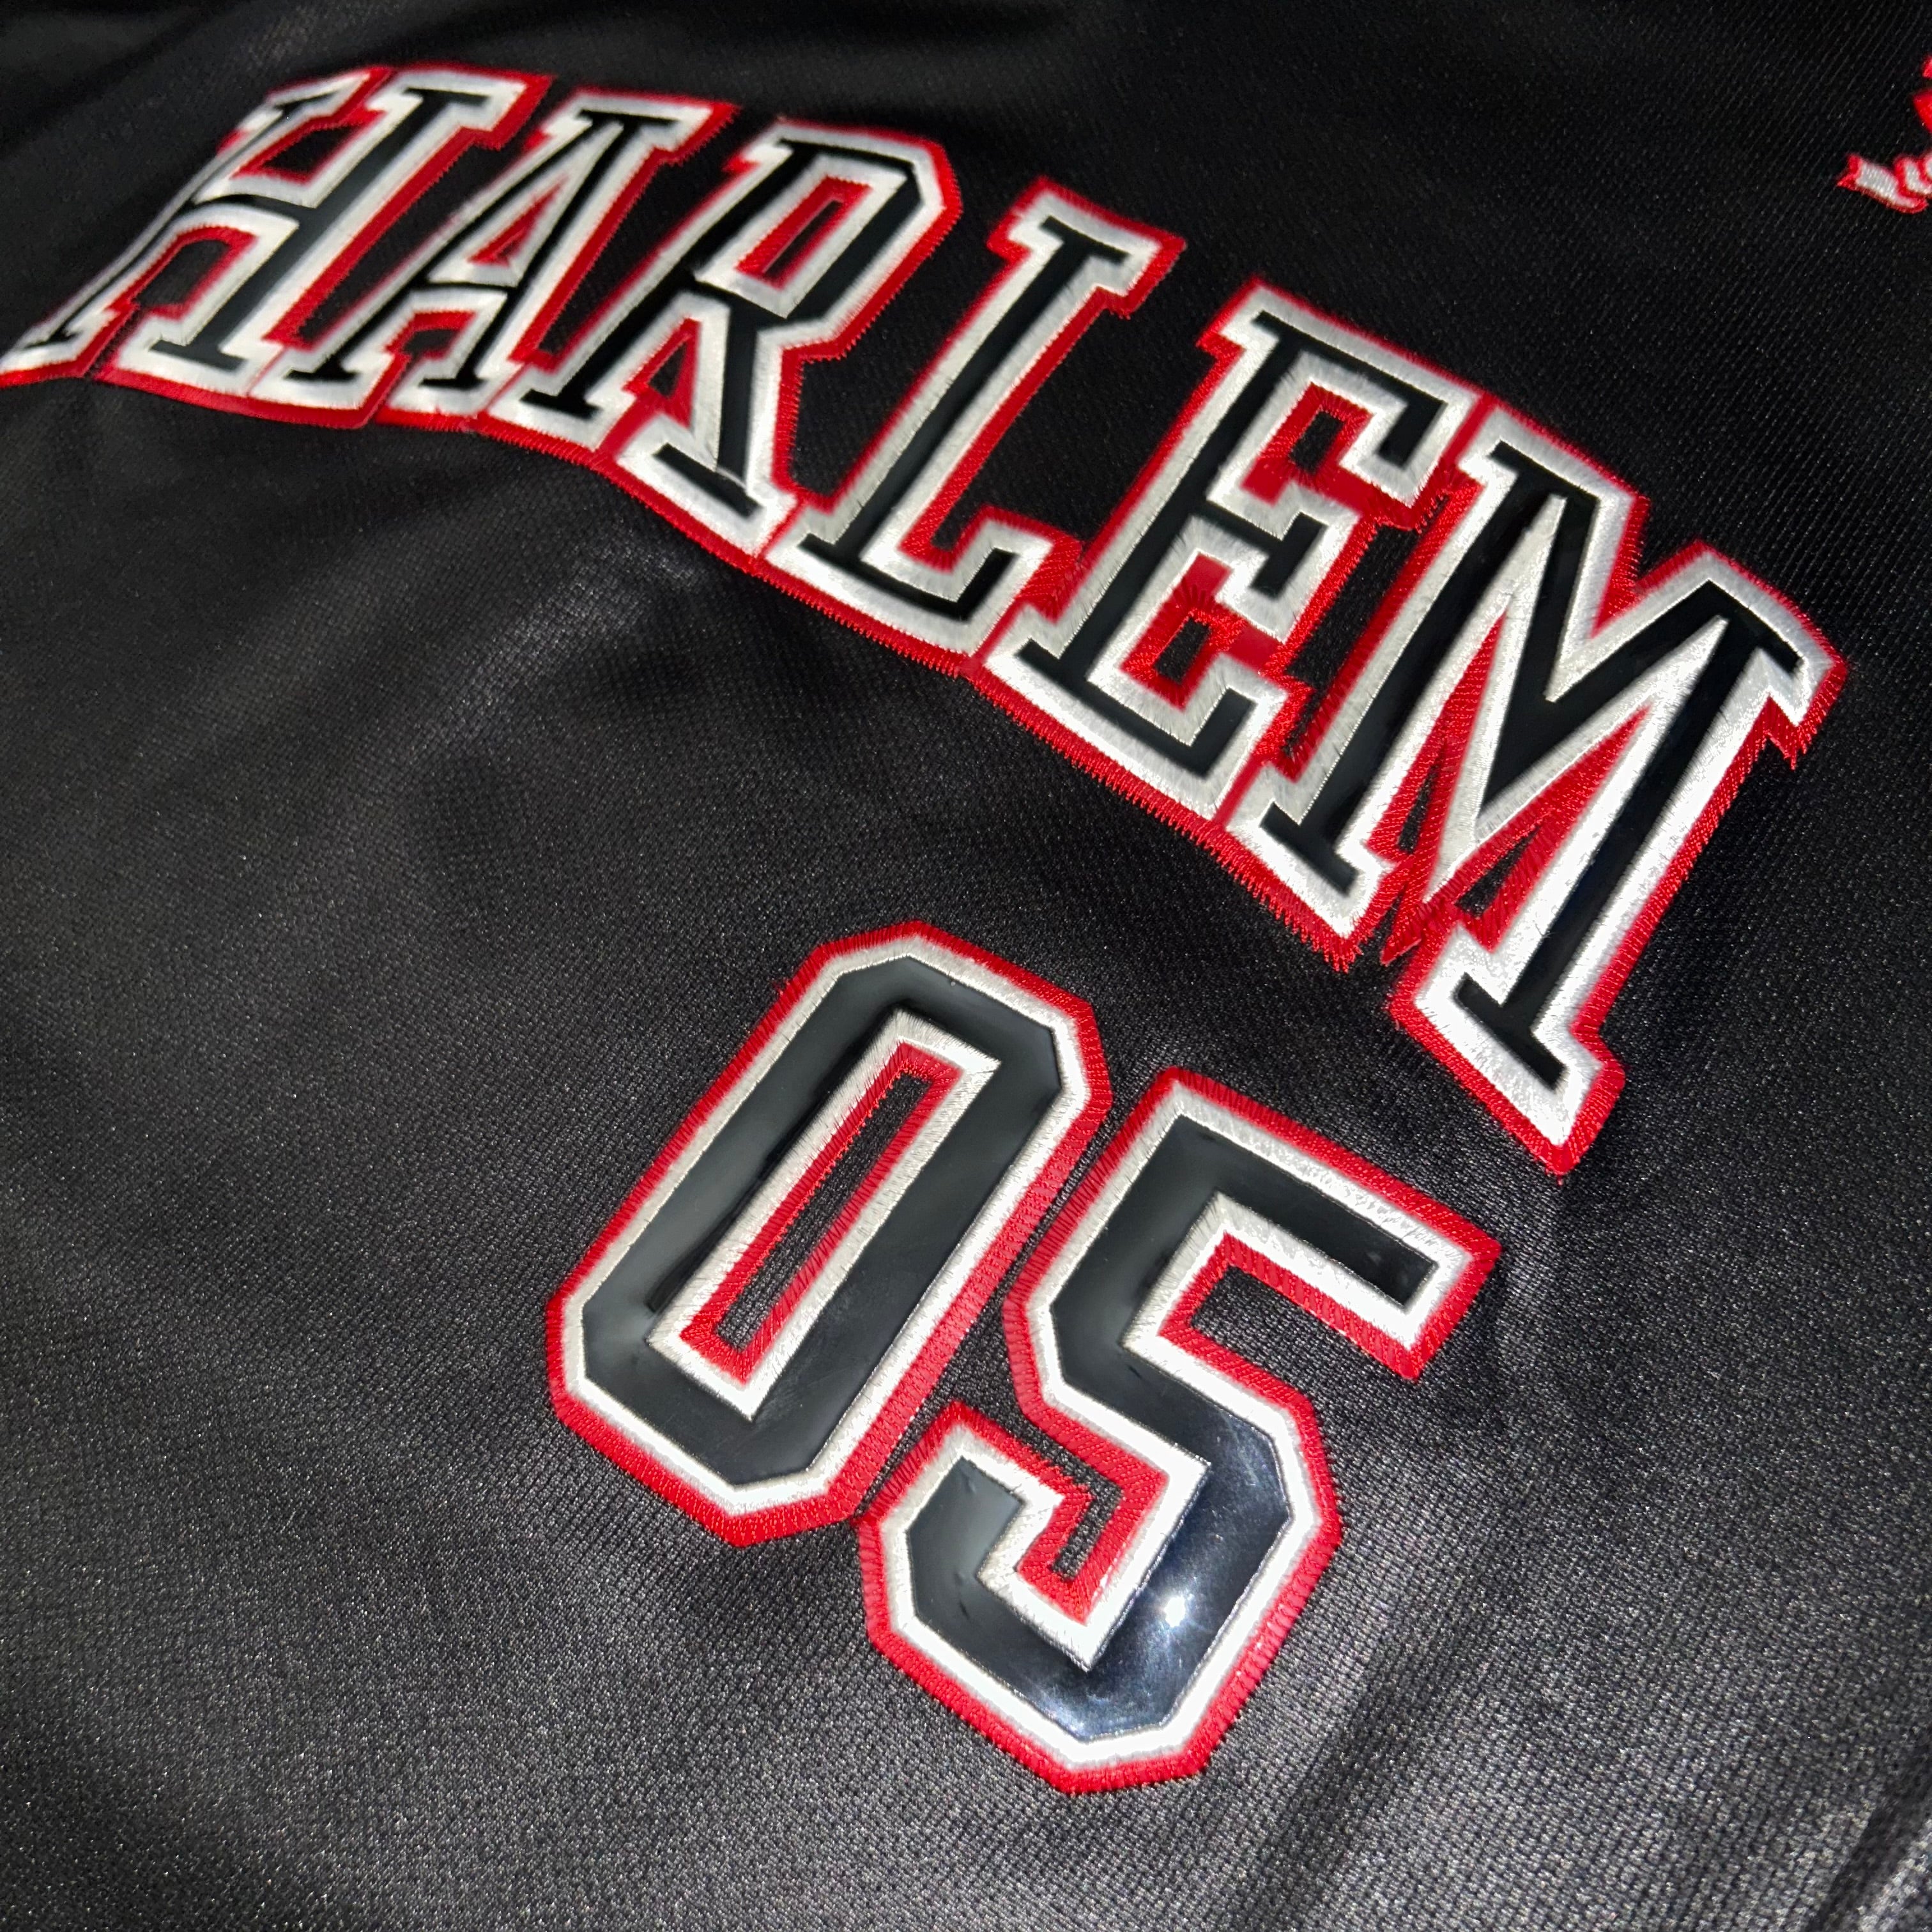 FUBU Athletics Harlem Vintage Jersey (XXL)